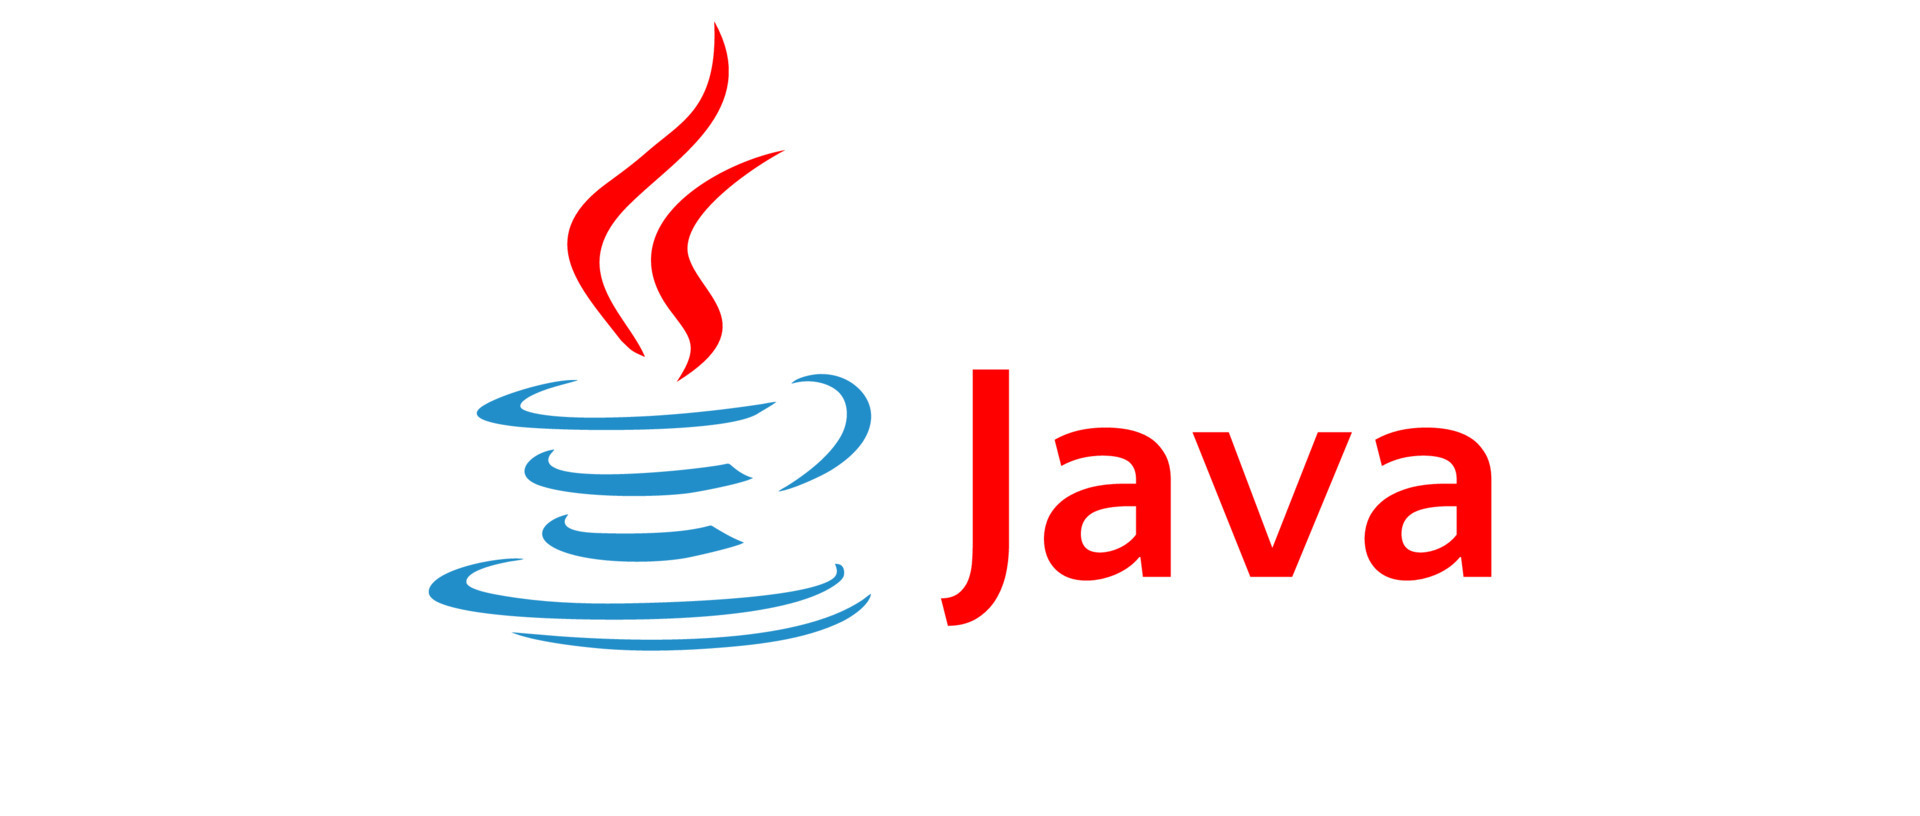 Java редактор